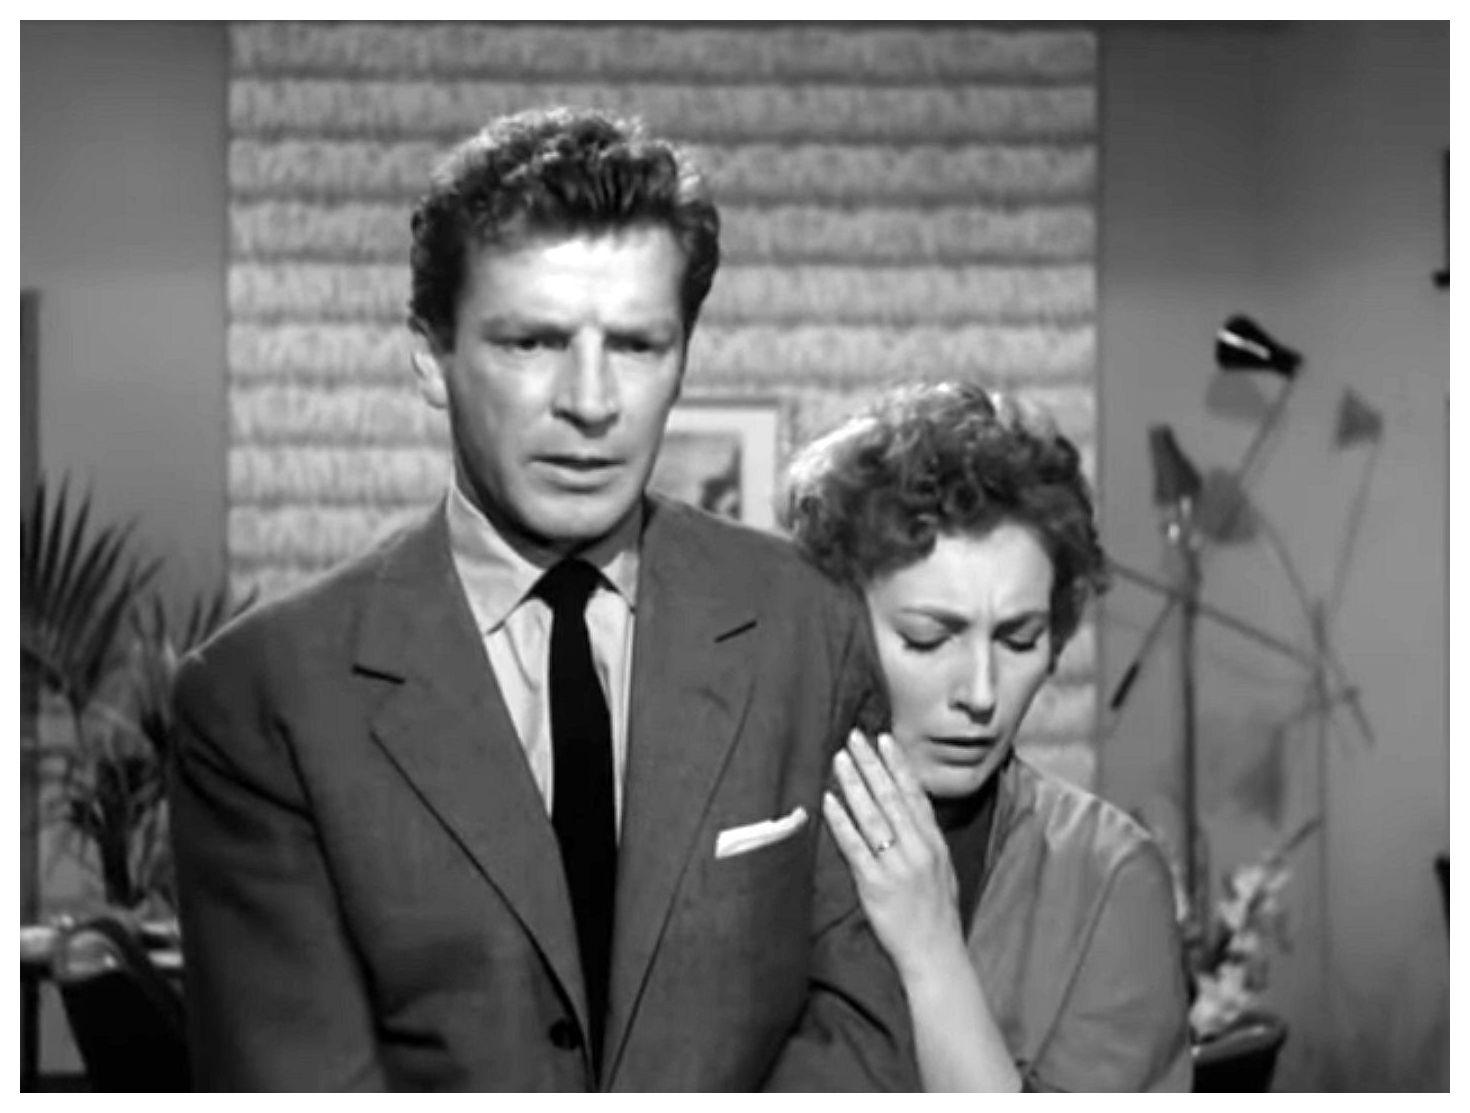 Avanzi di galera (1954) Screenshot 1 